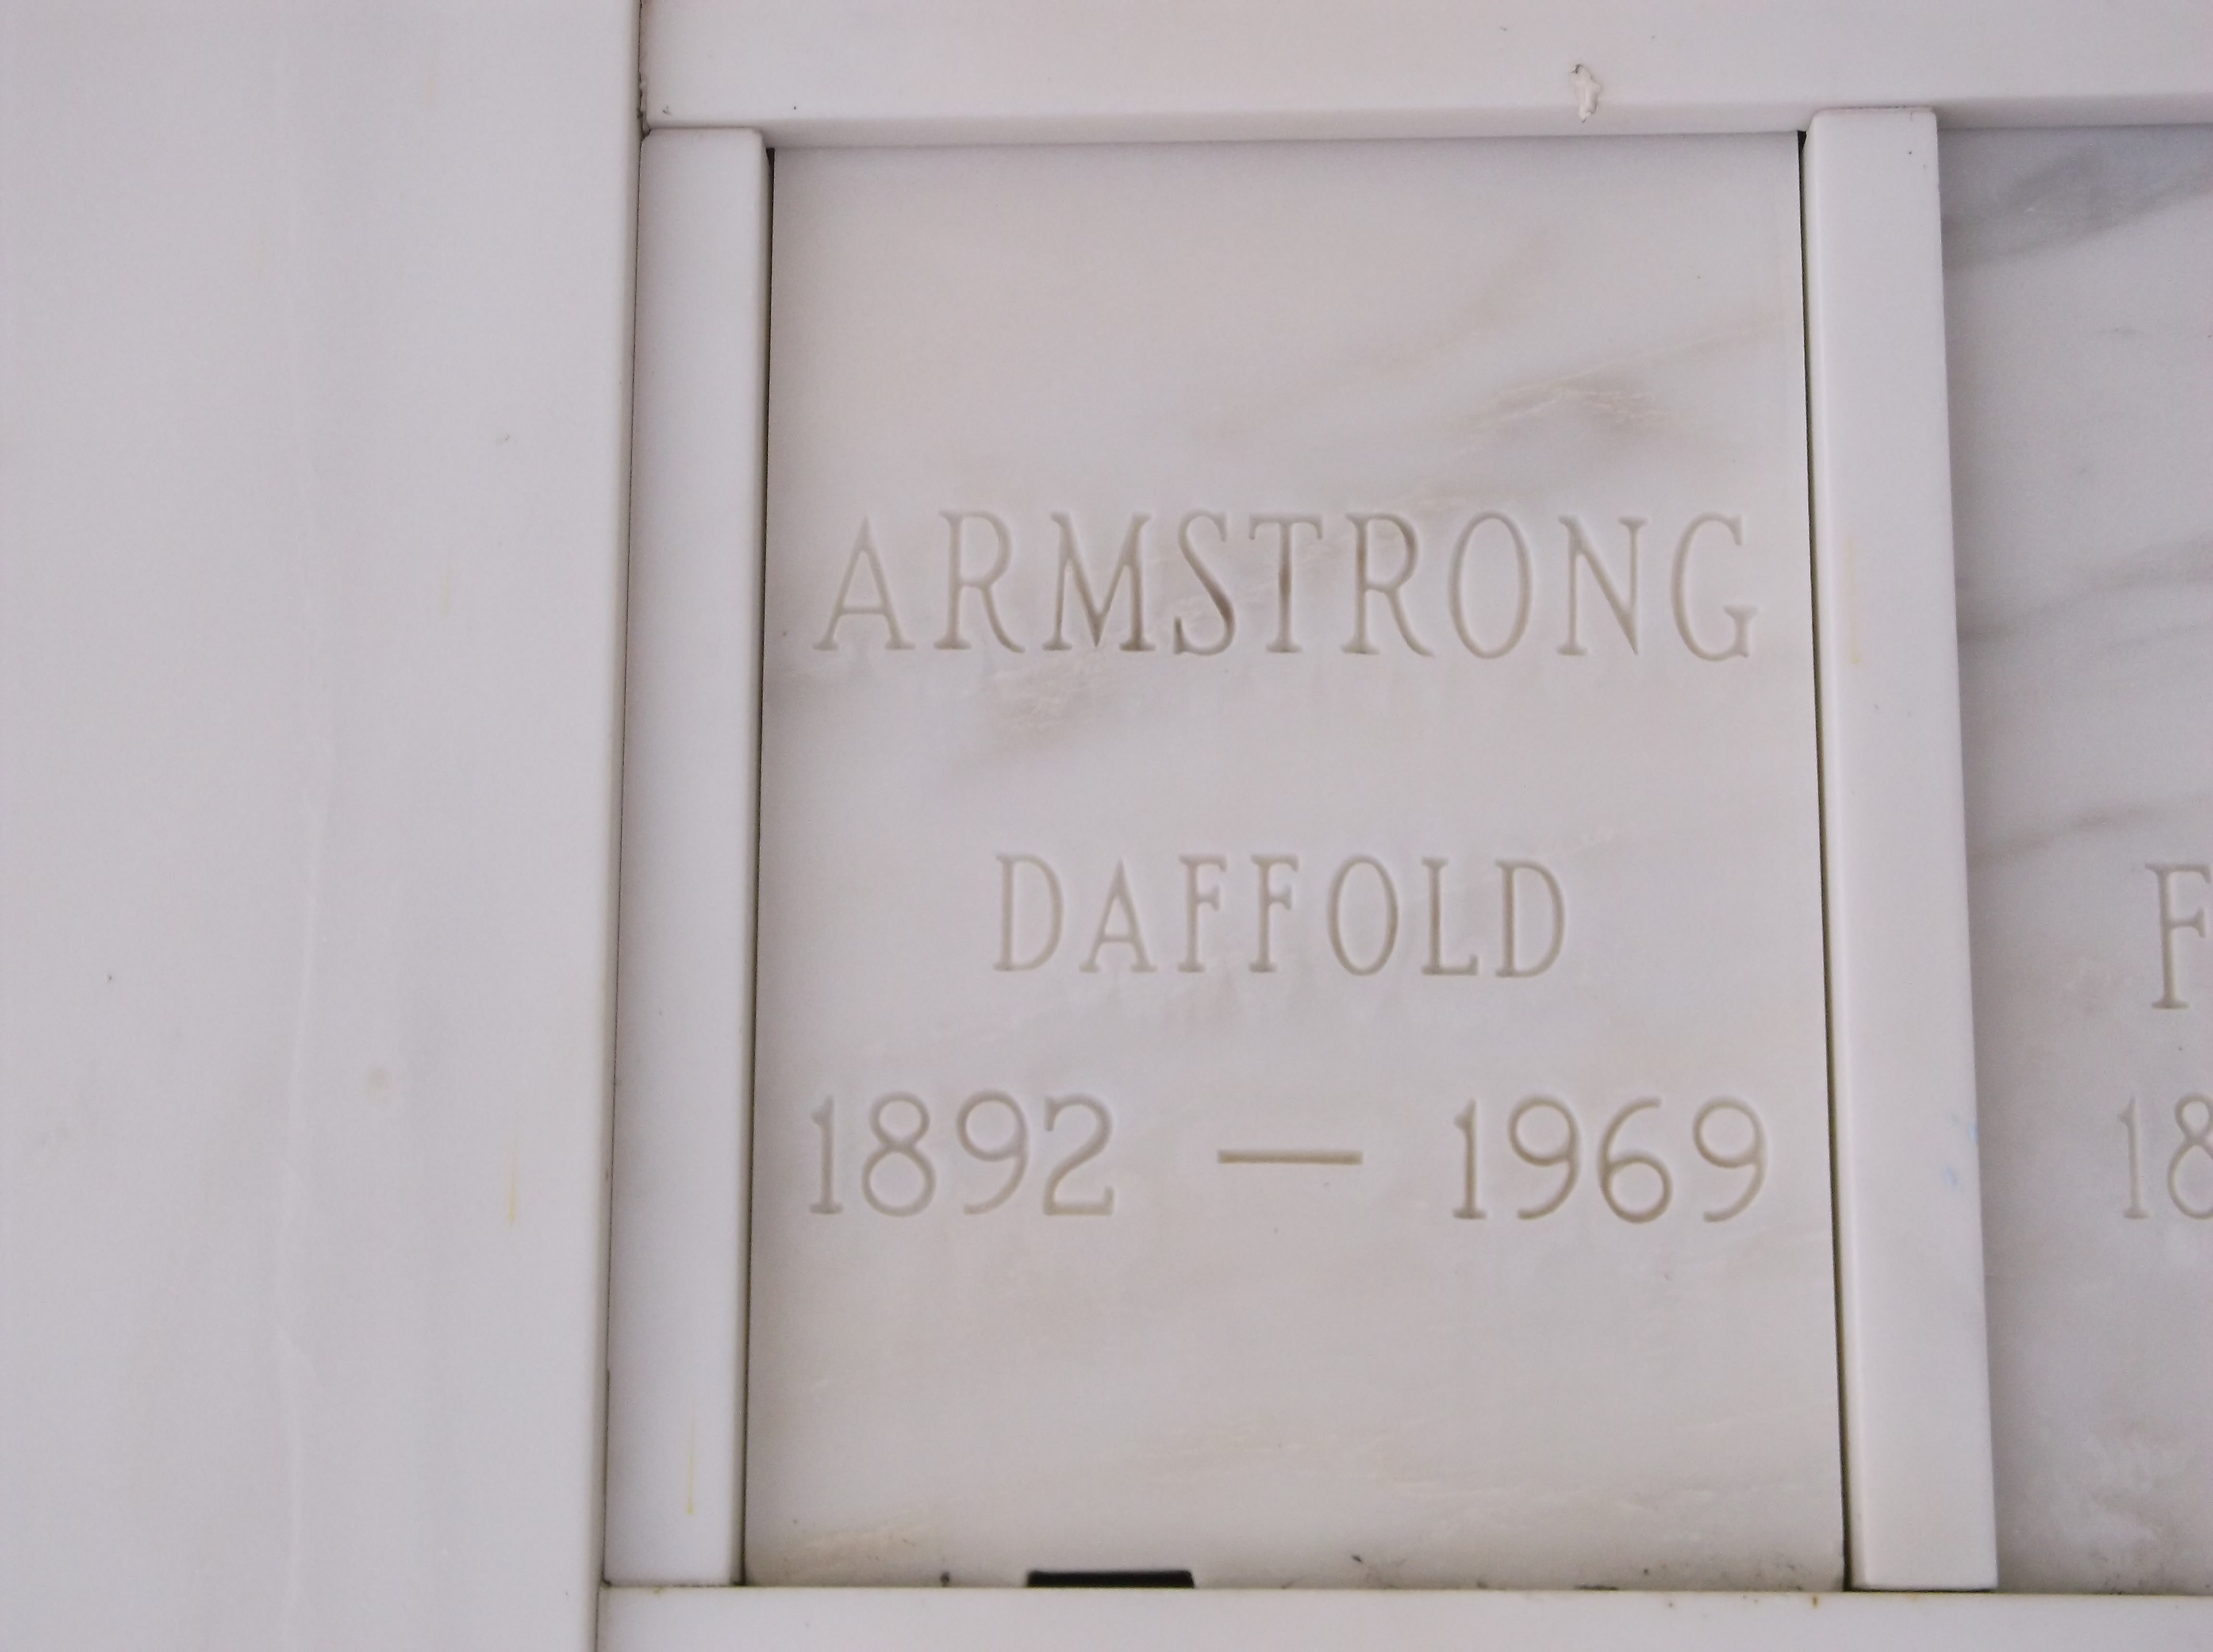 Daffold Armstrong